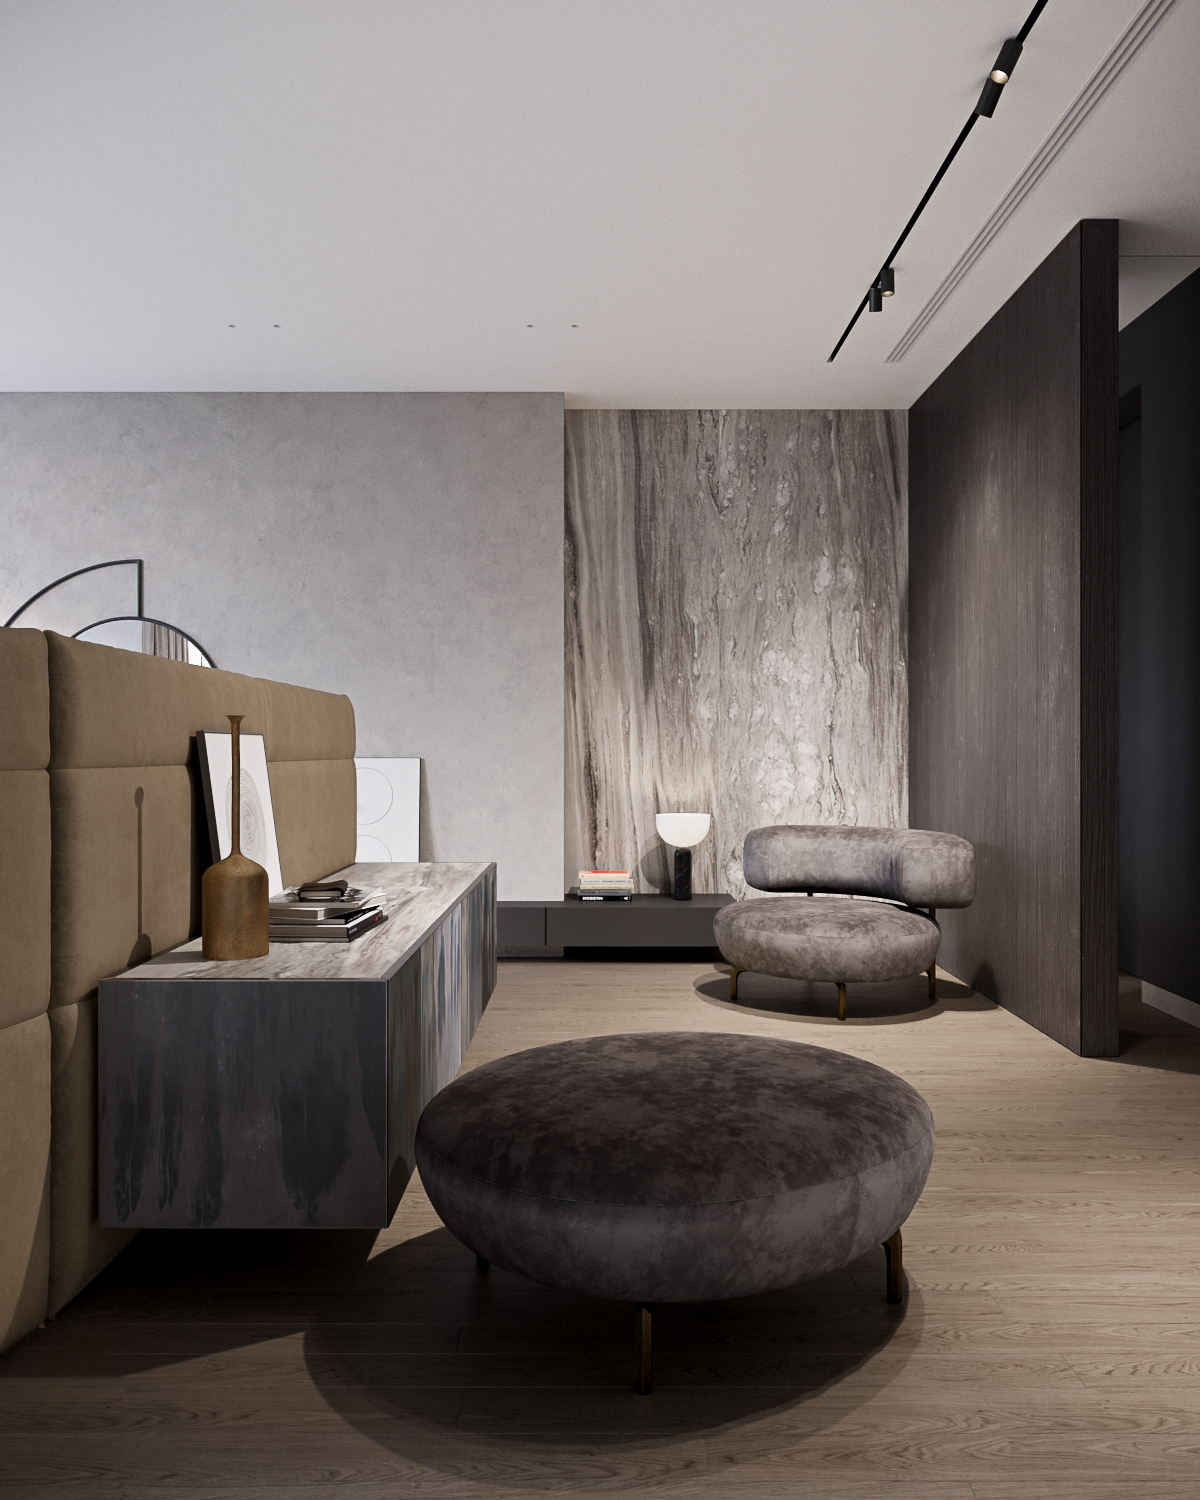 Interior luxury modern contemporary interiordesign beauty architecture mofernhome